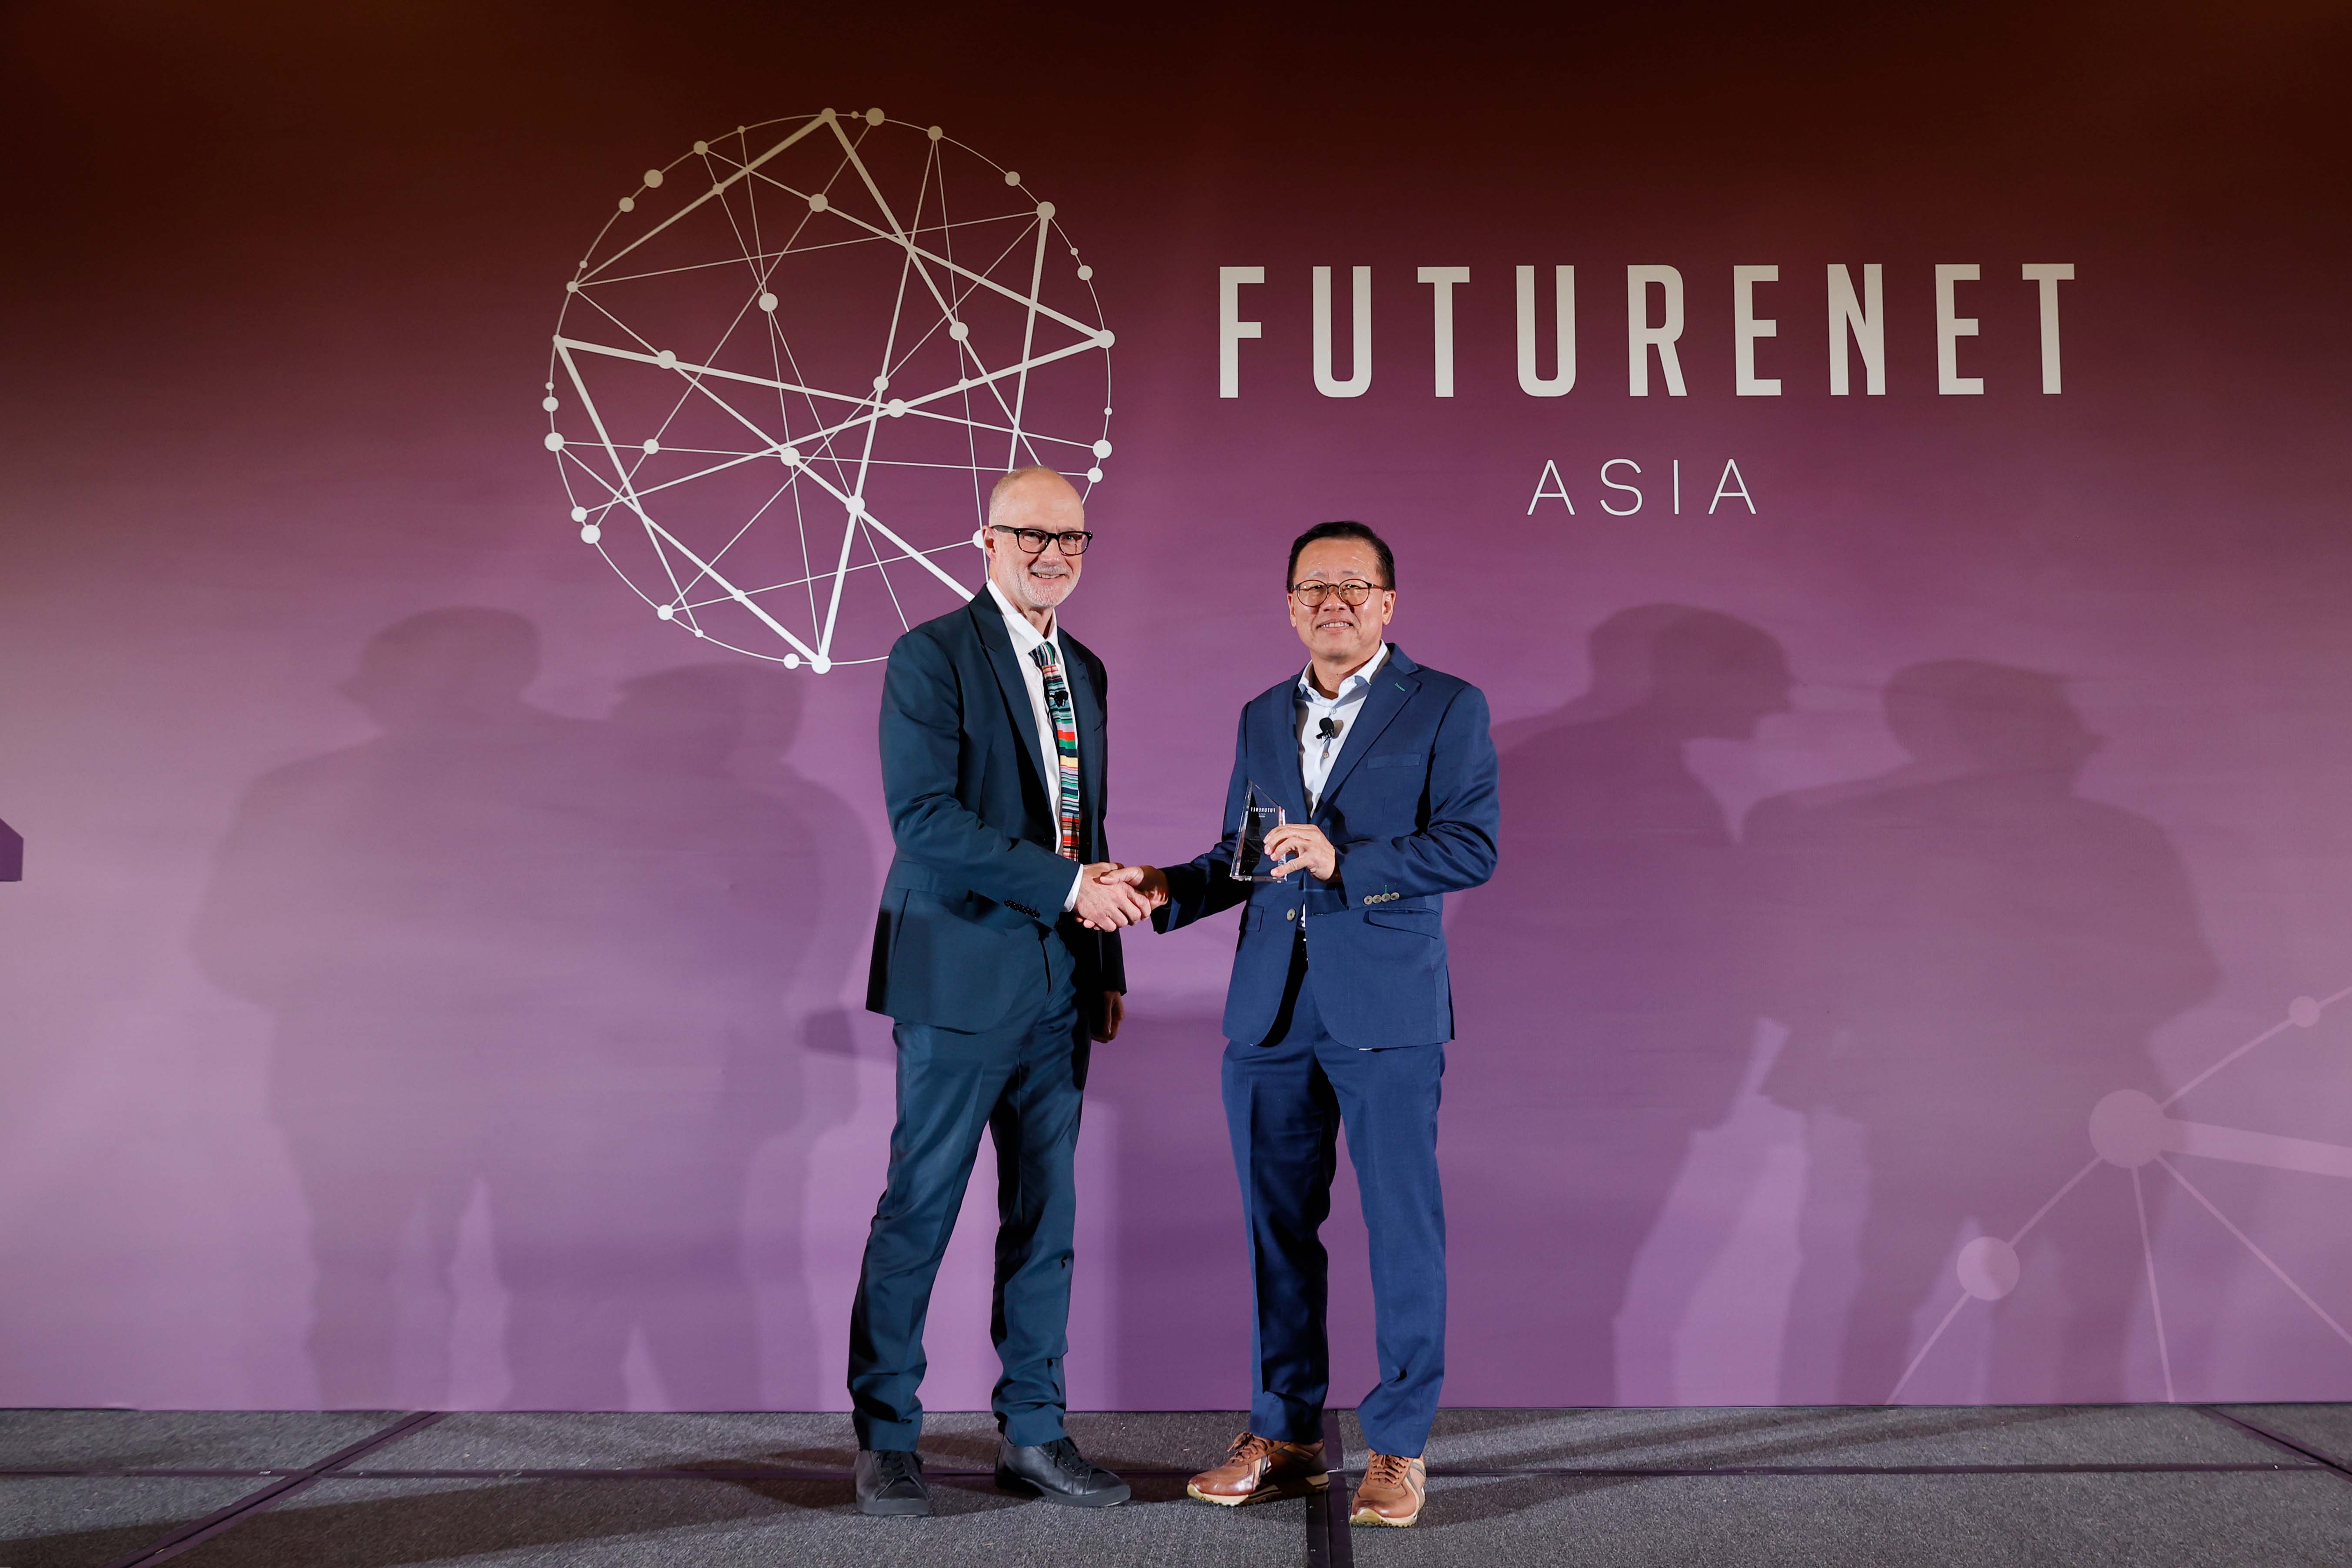 AIS คว้ารางวัลสุดยอดผู้นำ Technology Leader of the Year และ APAC Operator Award จาก FutureNet Asia